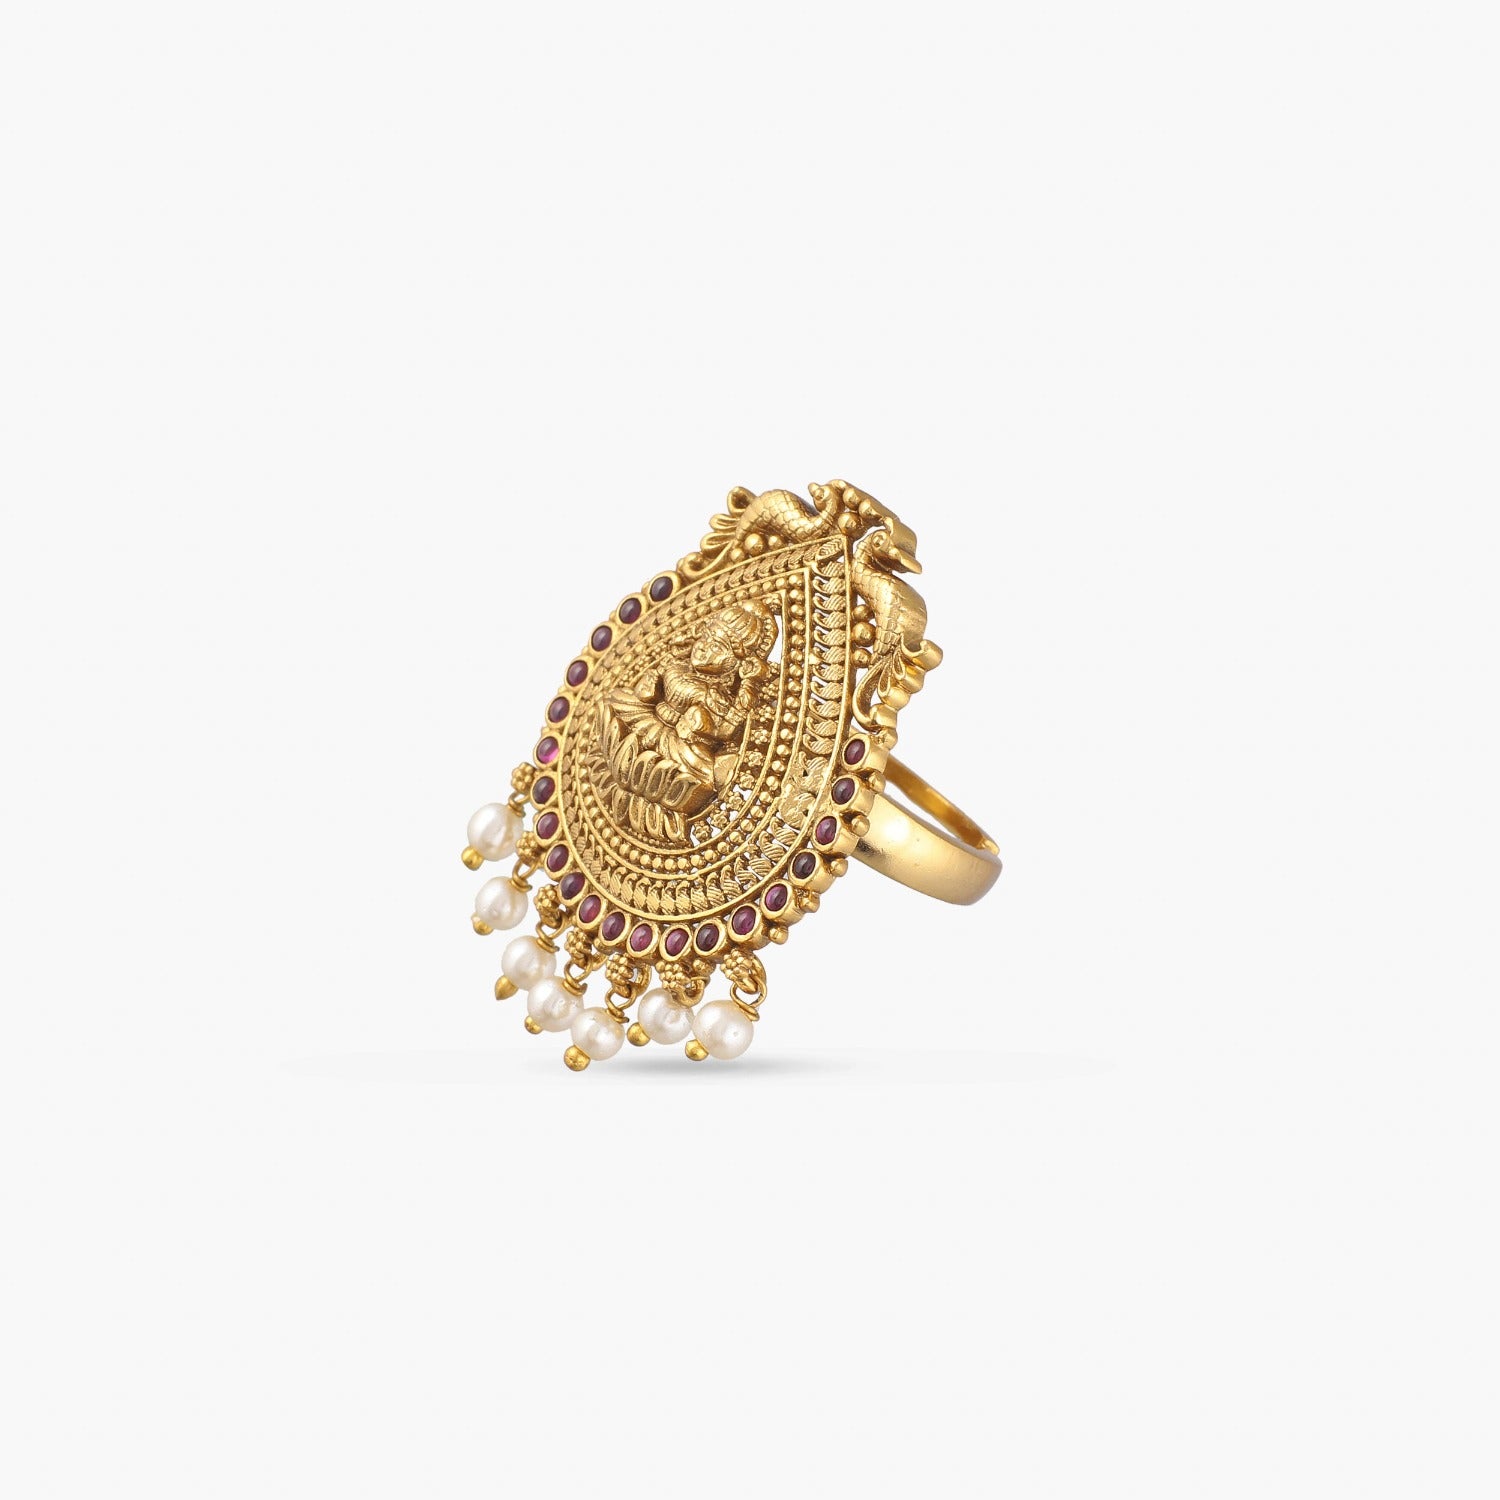 Antique Golden Finger Ring Sku 5931 E4 at Rs 77.00 | Malad East | Mumbai|  ID: 2852514678962